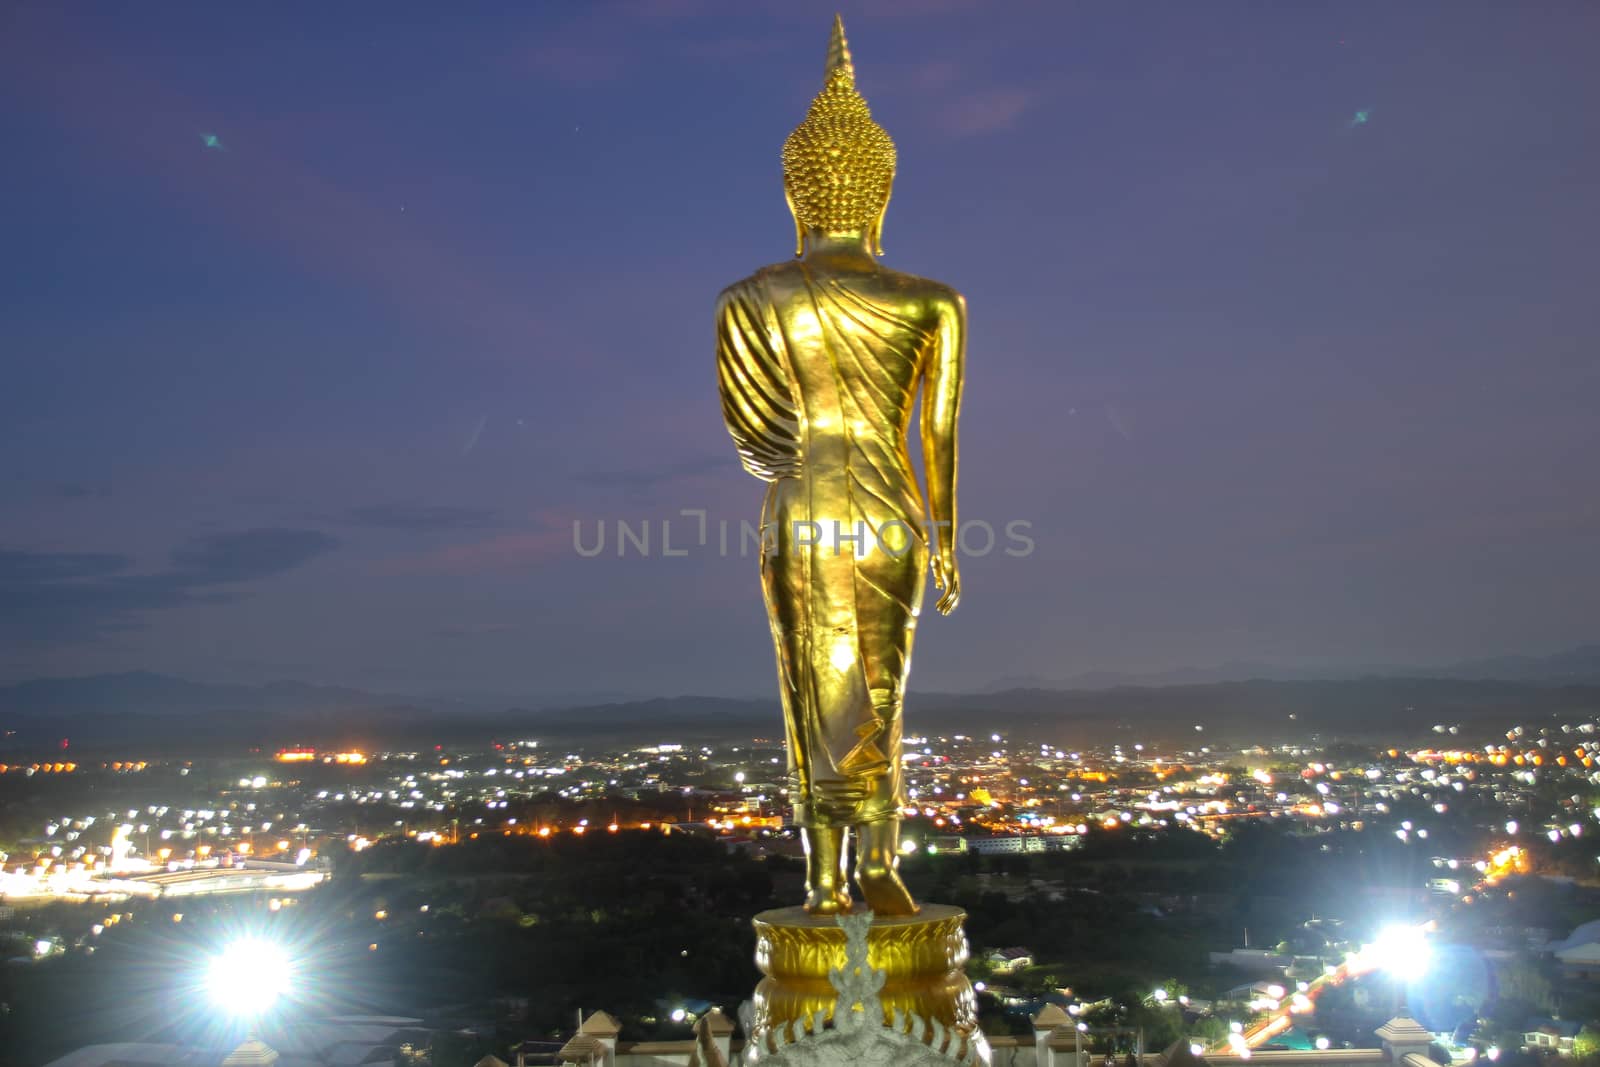 Wat phra that kao noi,NAN,THAILAND by suthipong